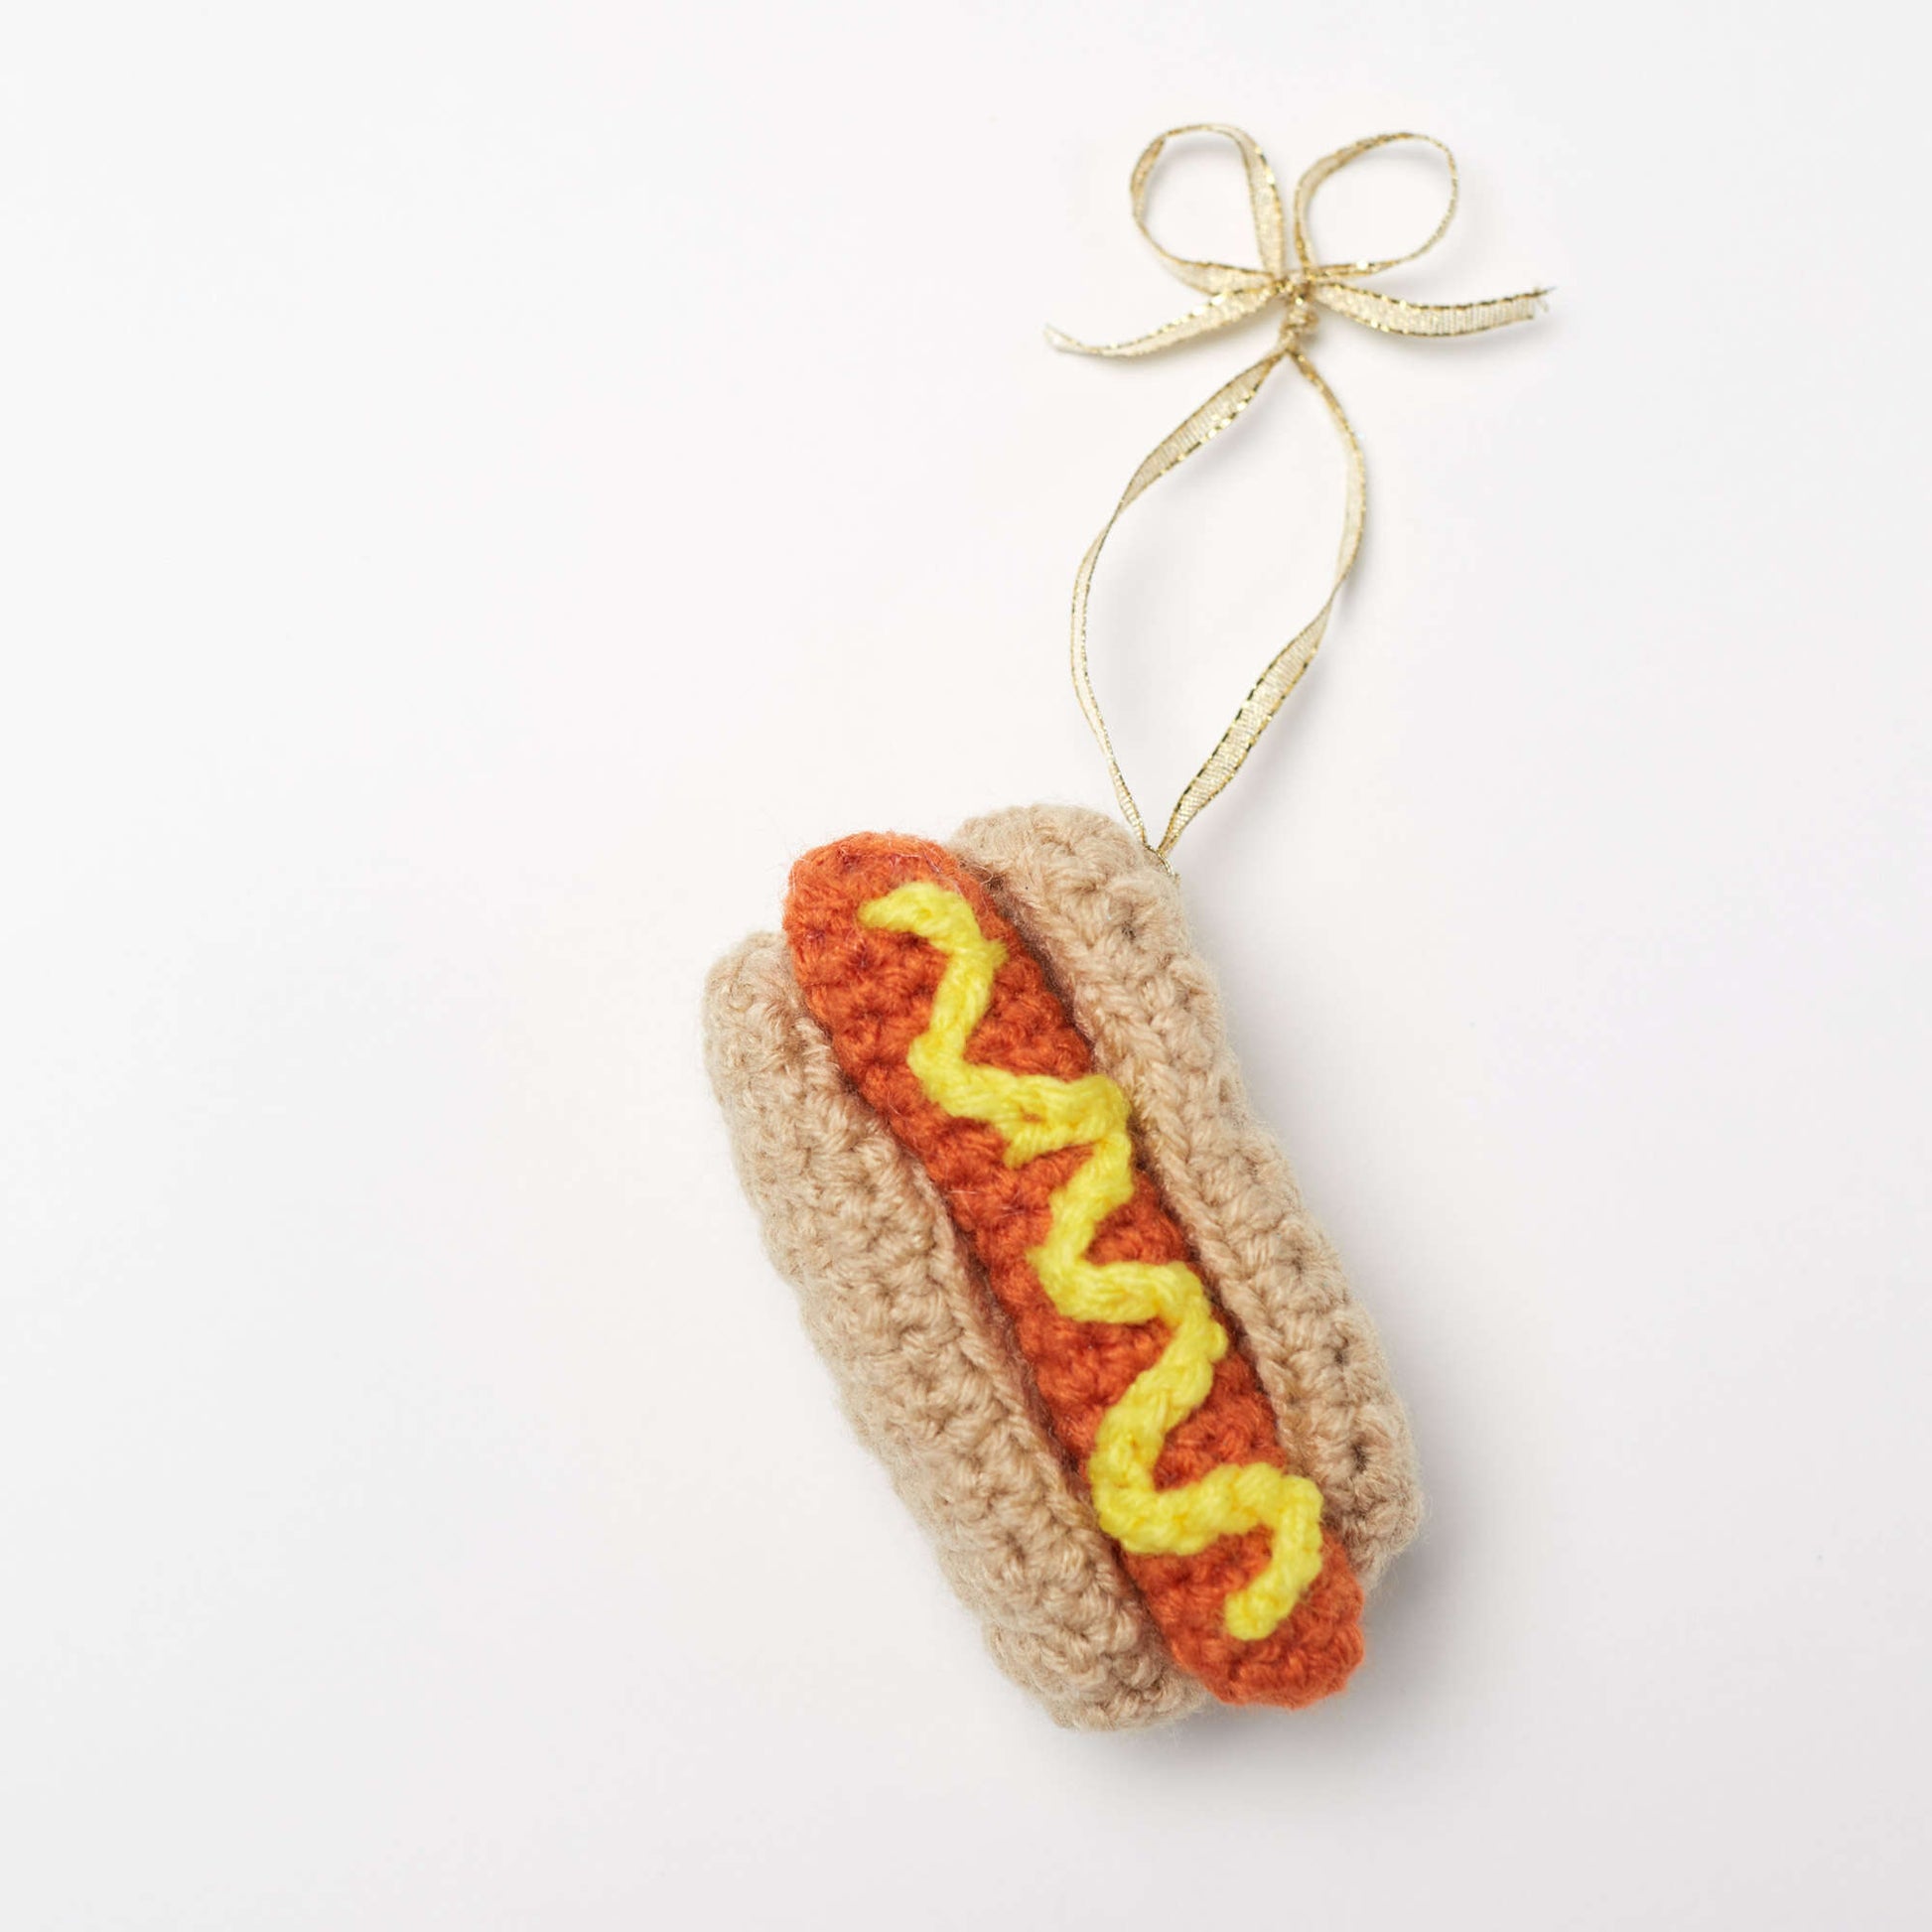 Hot Dog Keychains - No Minimum Quantity